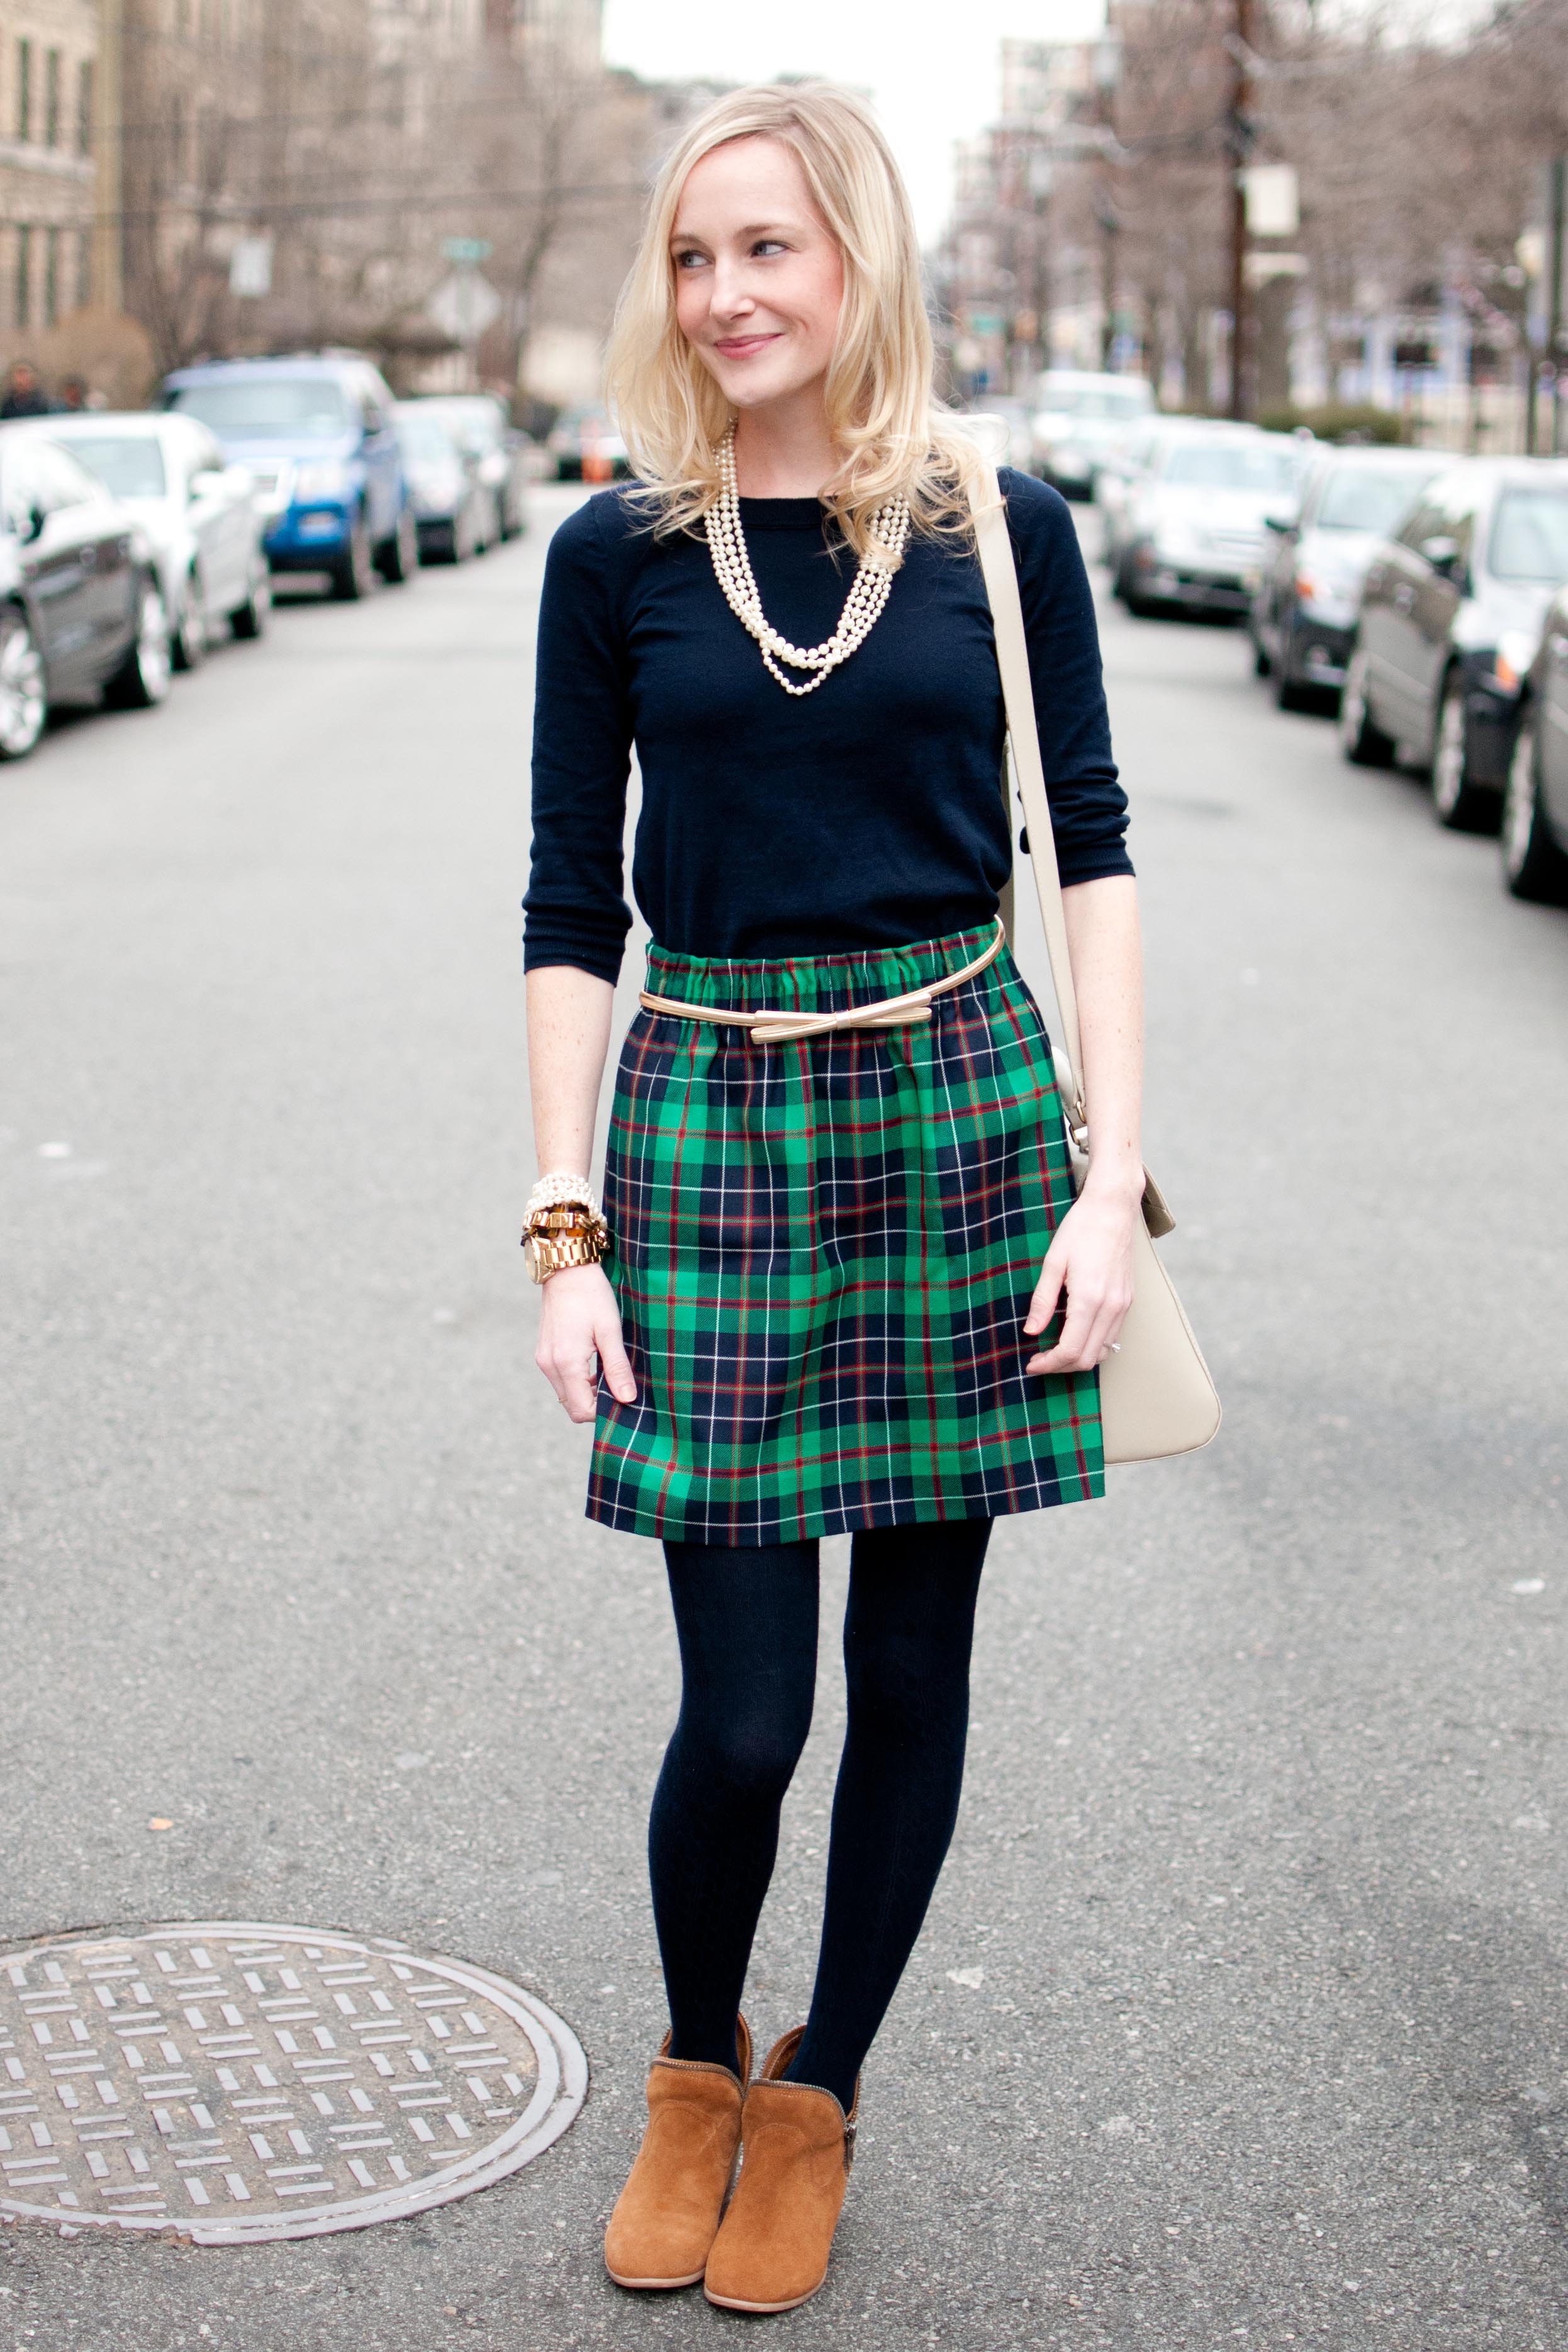 Irish girls in mini skirts